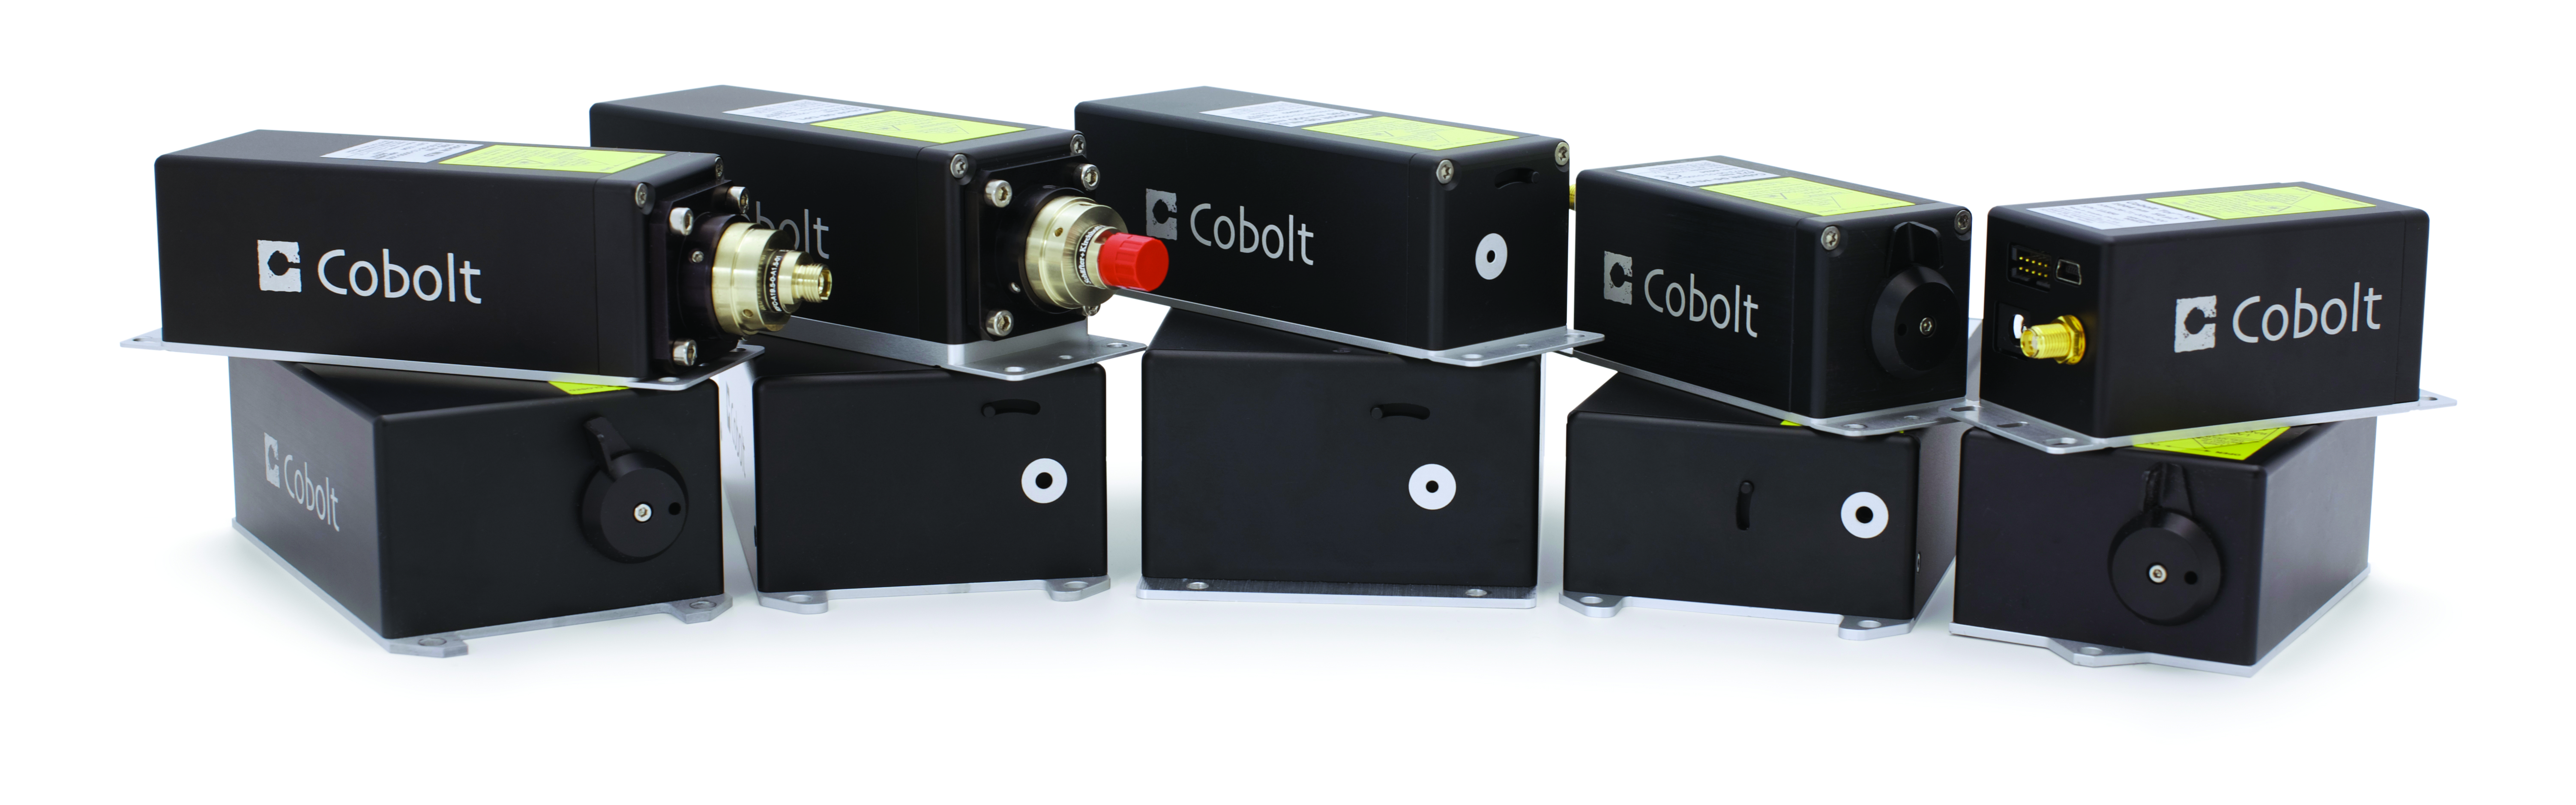 Cobolt laser for interferometry